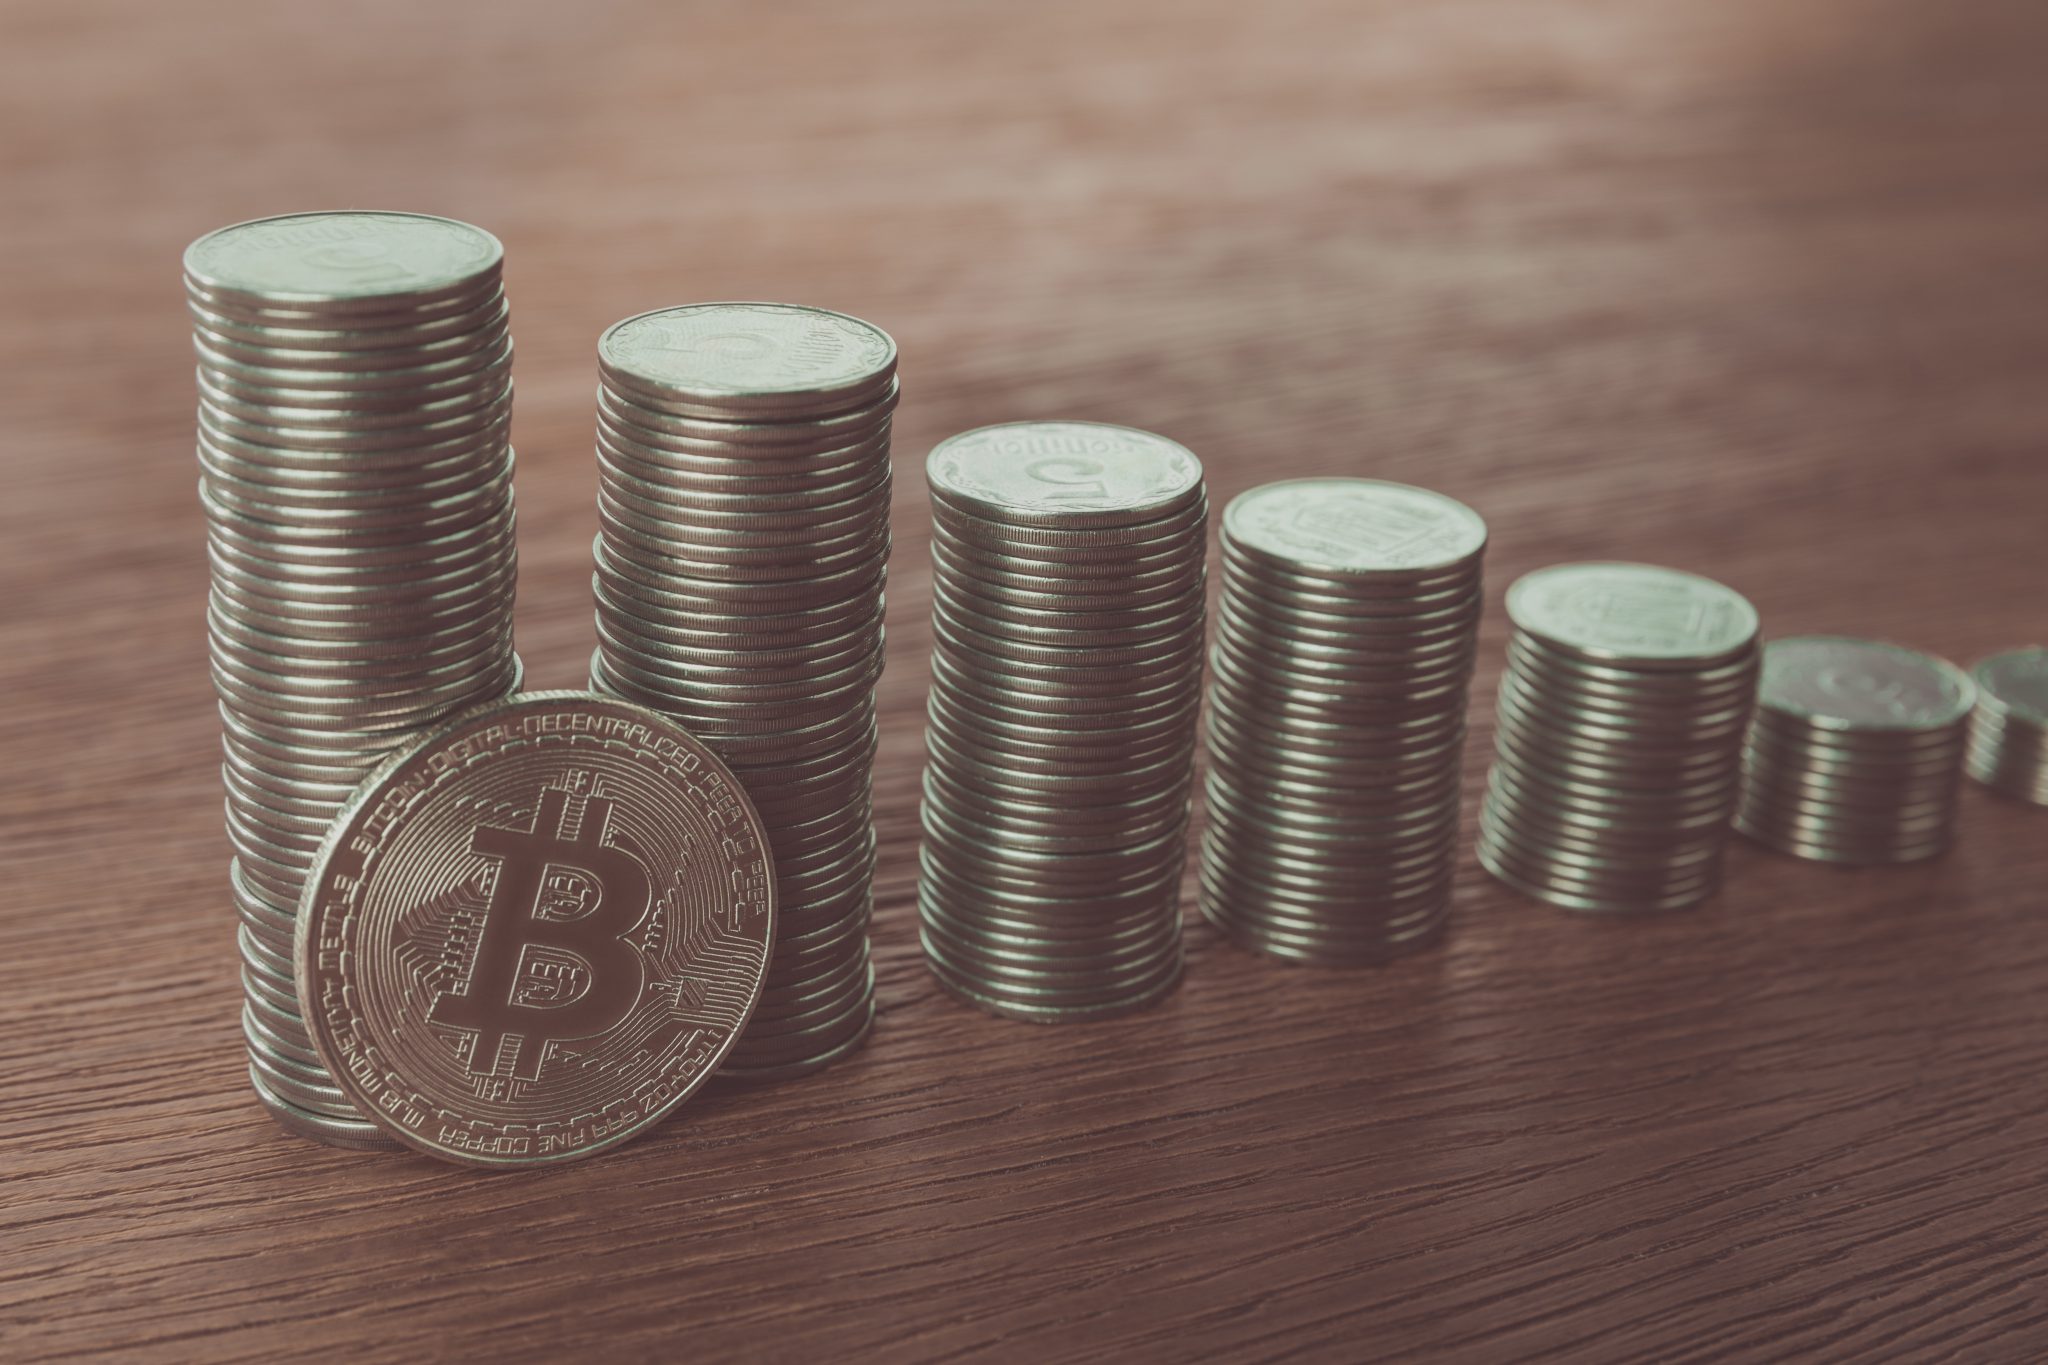 bitcoin near stacks of coins on tabletop, saving concept